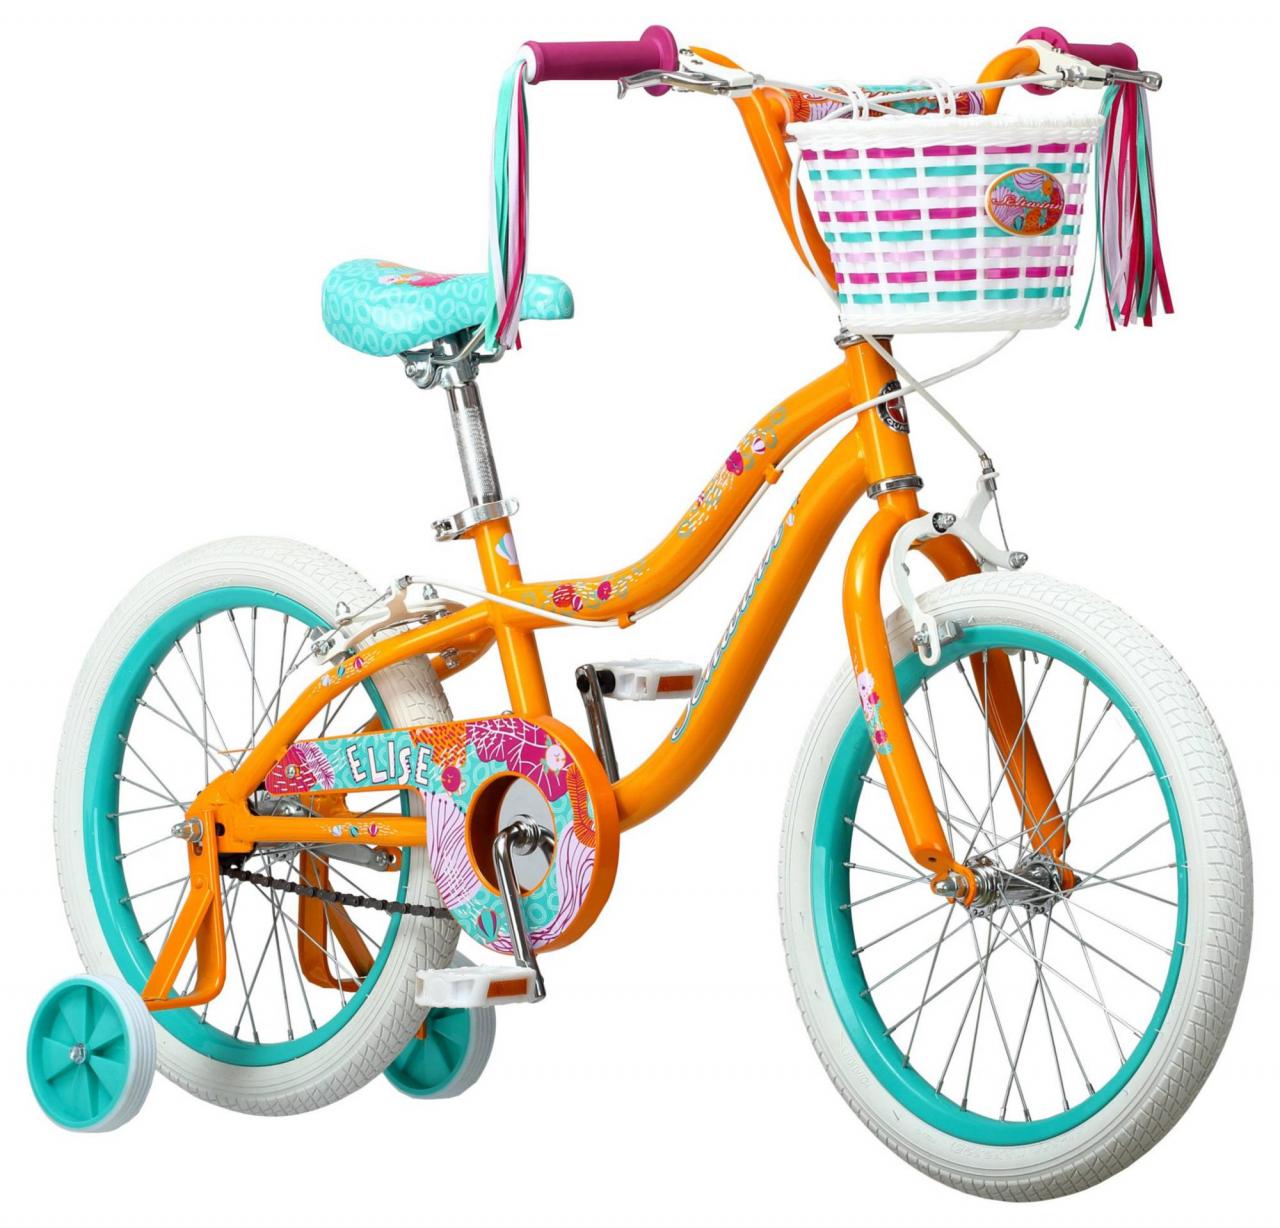 Schwinn Girl's Bicycle Basket